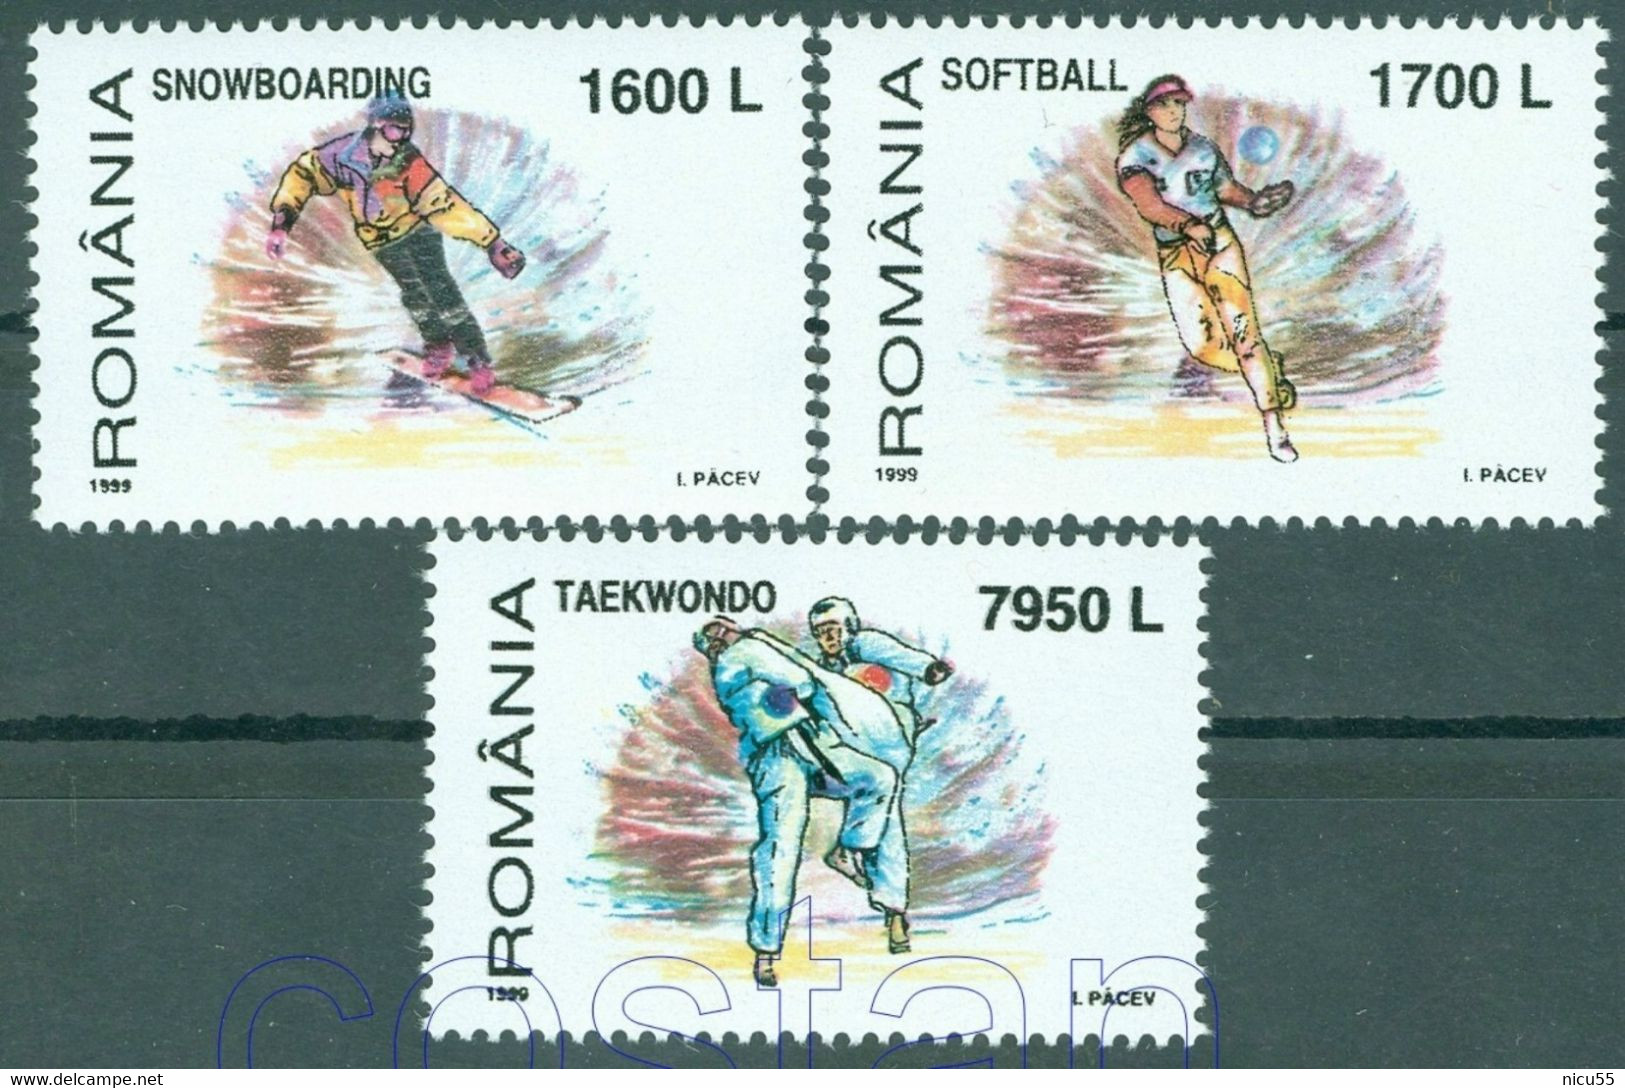 1999 Taekwondo/Tae Kwon Do,Softball,Snowboarding,New Olympic SPORTS,Romania,Mi.5441/Y.4568,MNH - Unclassified